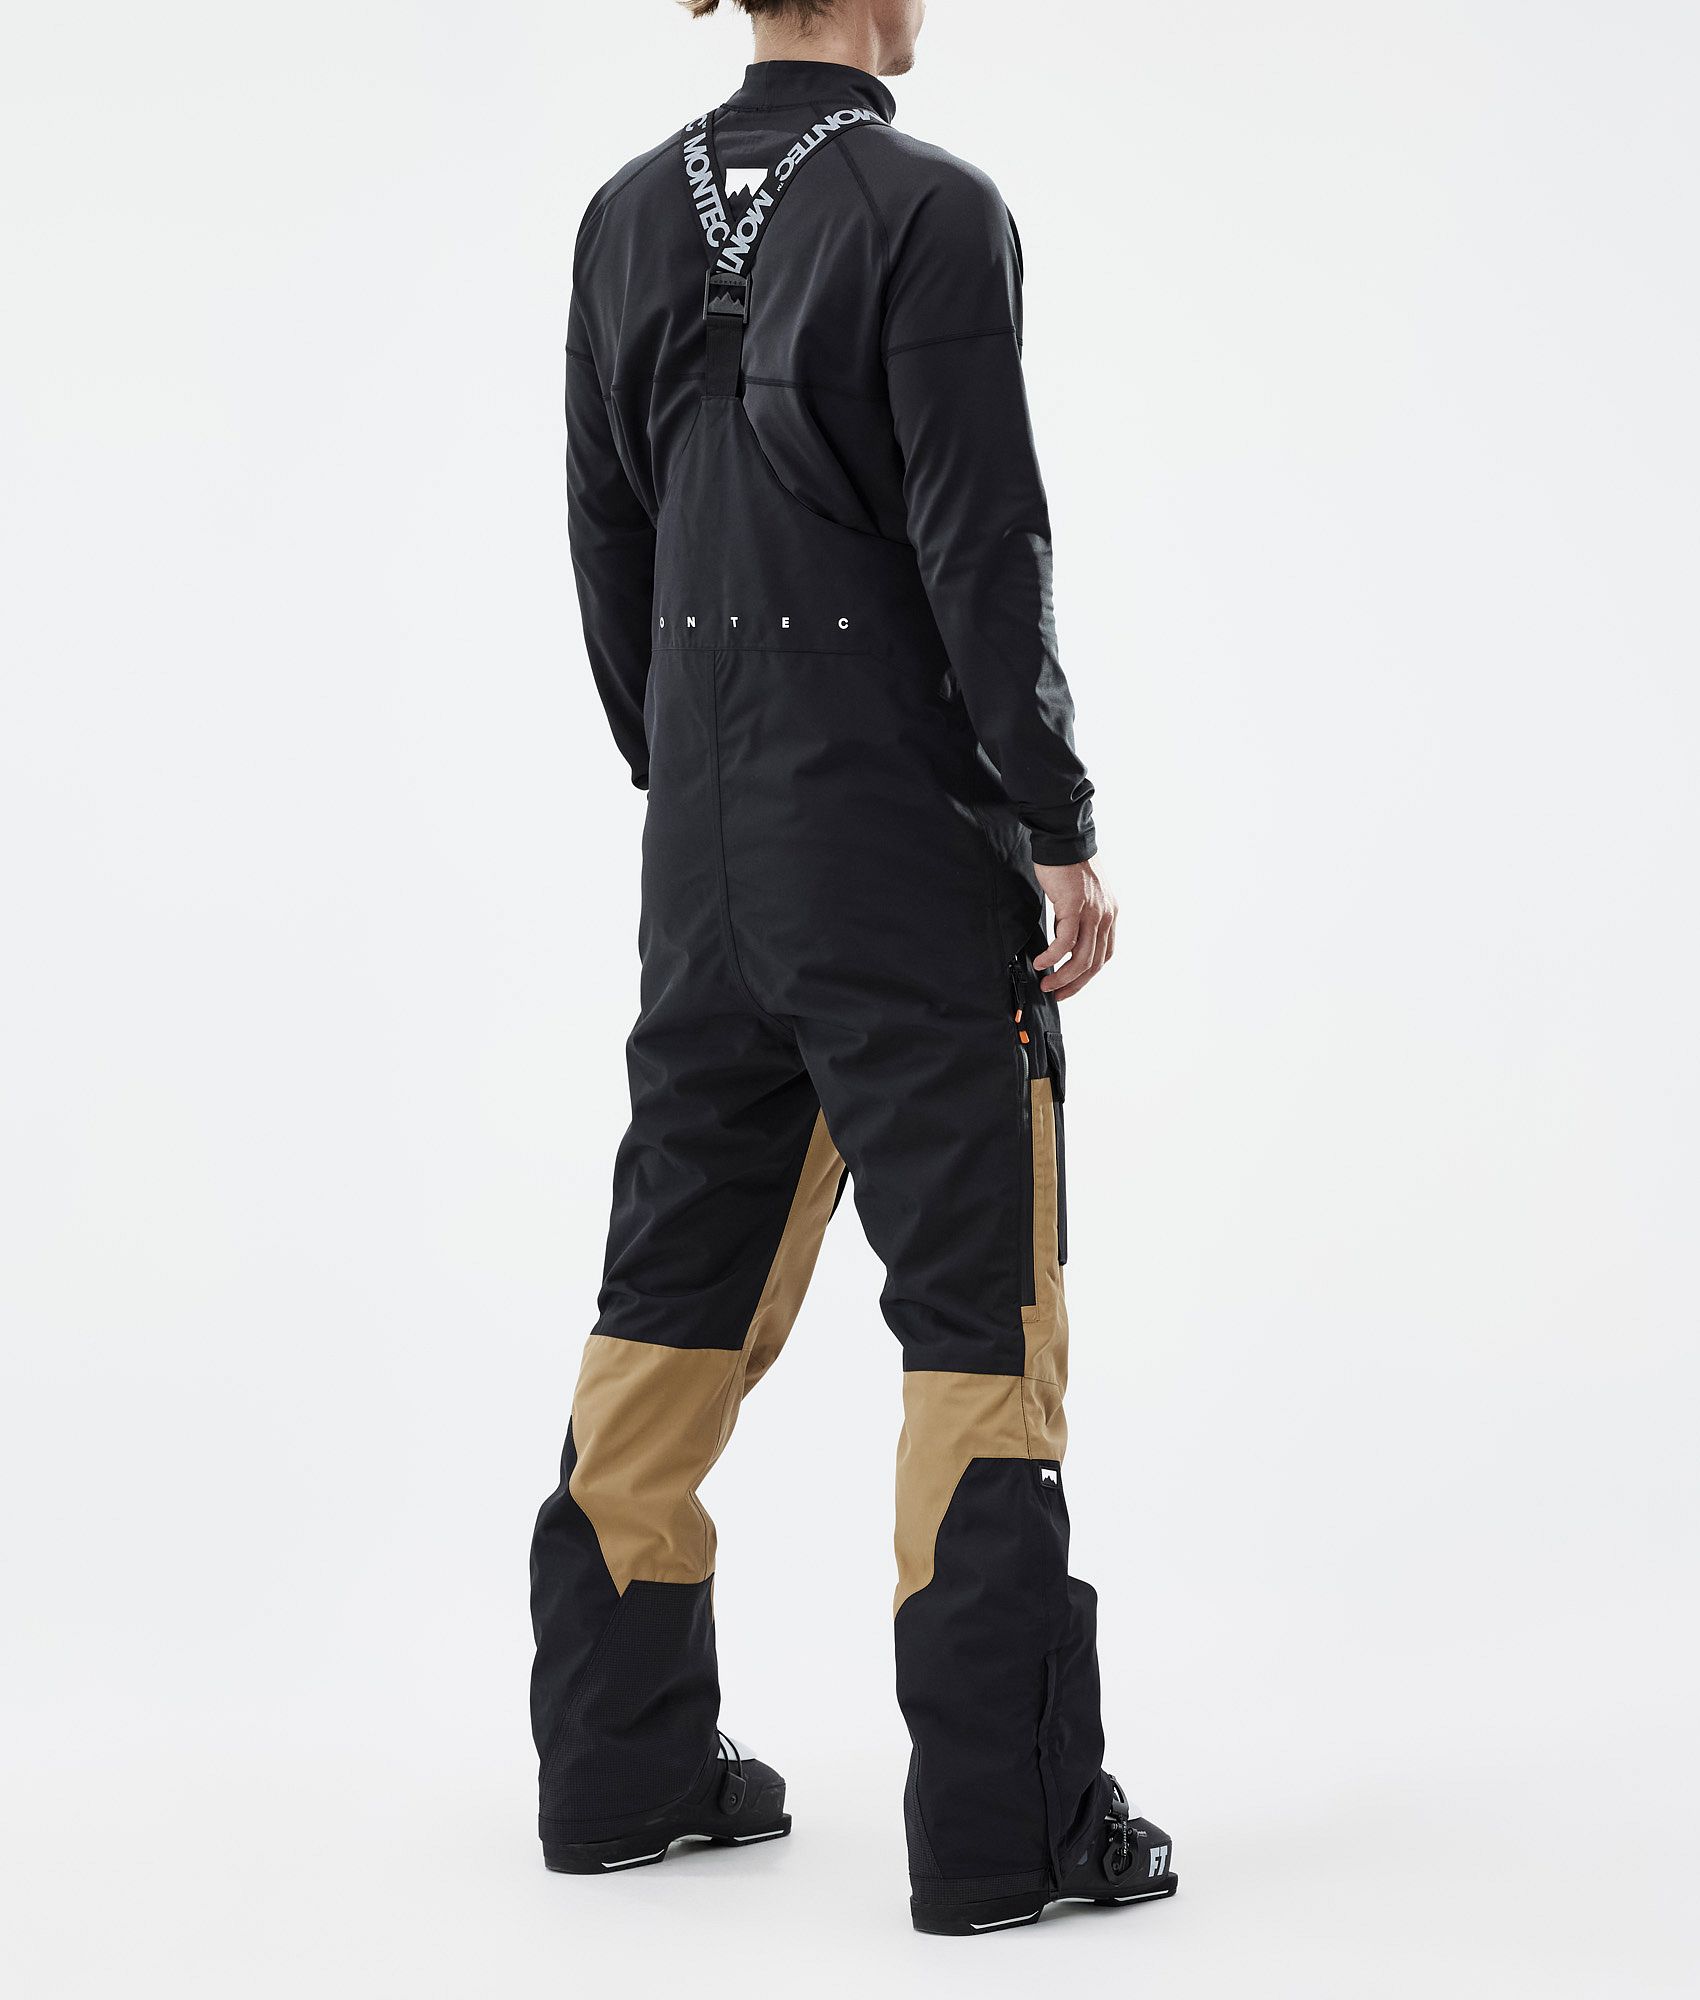 Montec Fawk スキーパンツ メンズ Black/Gold - 黒 | Montecwear.com